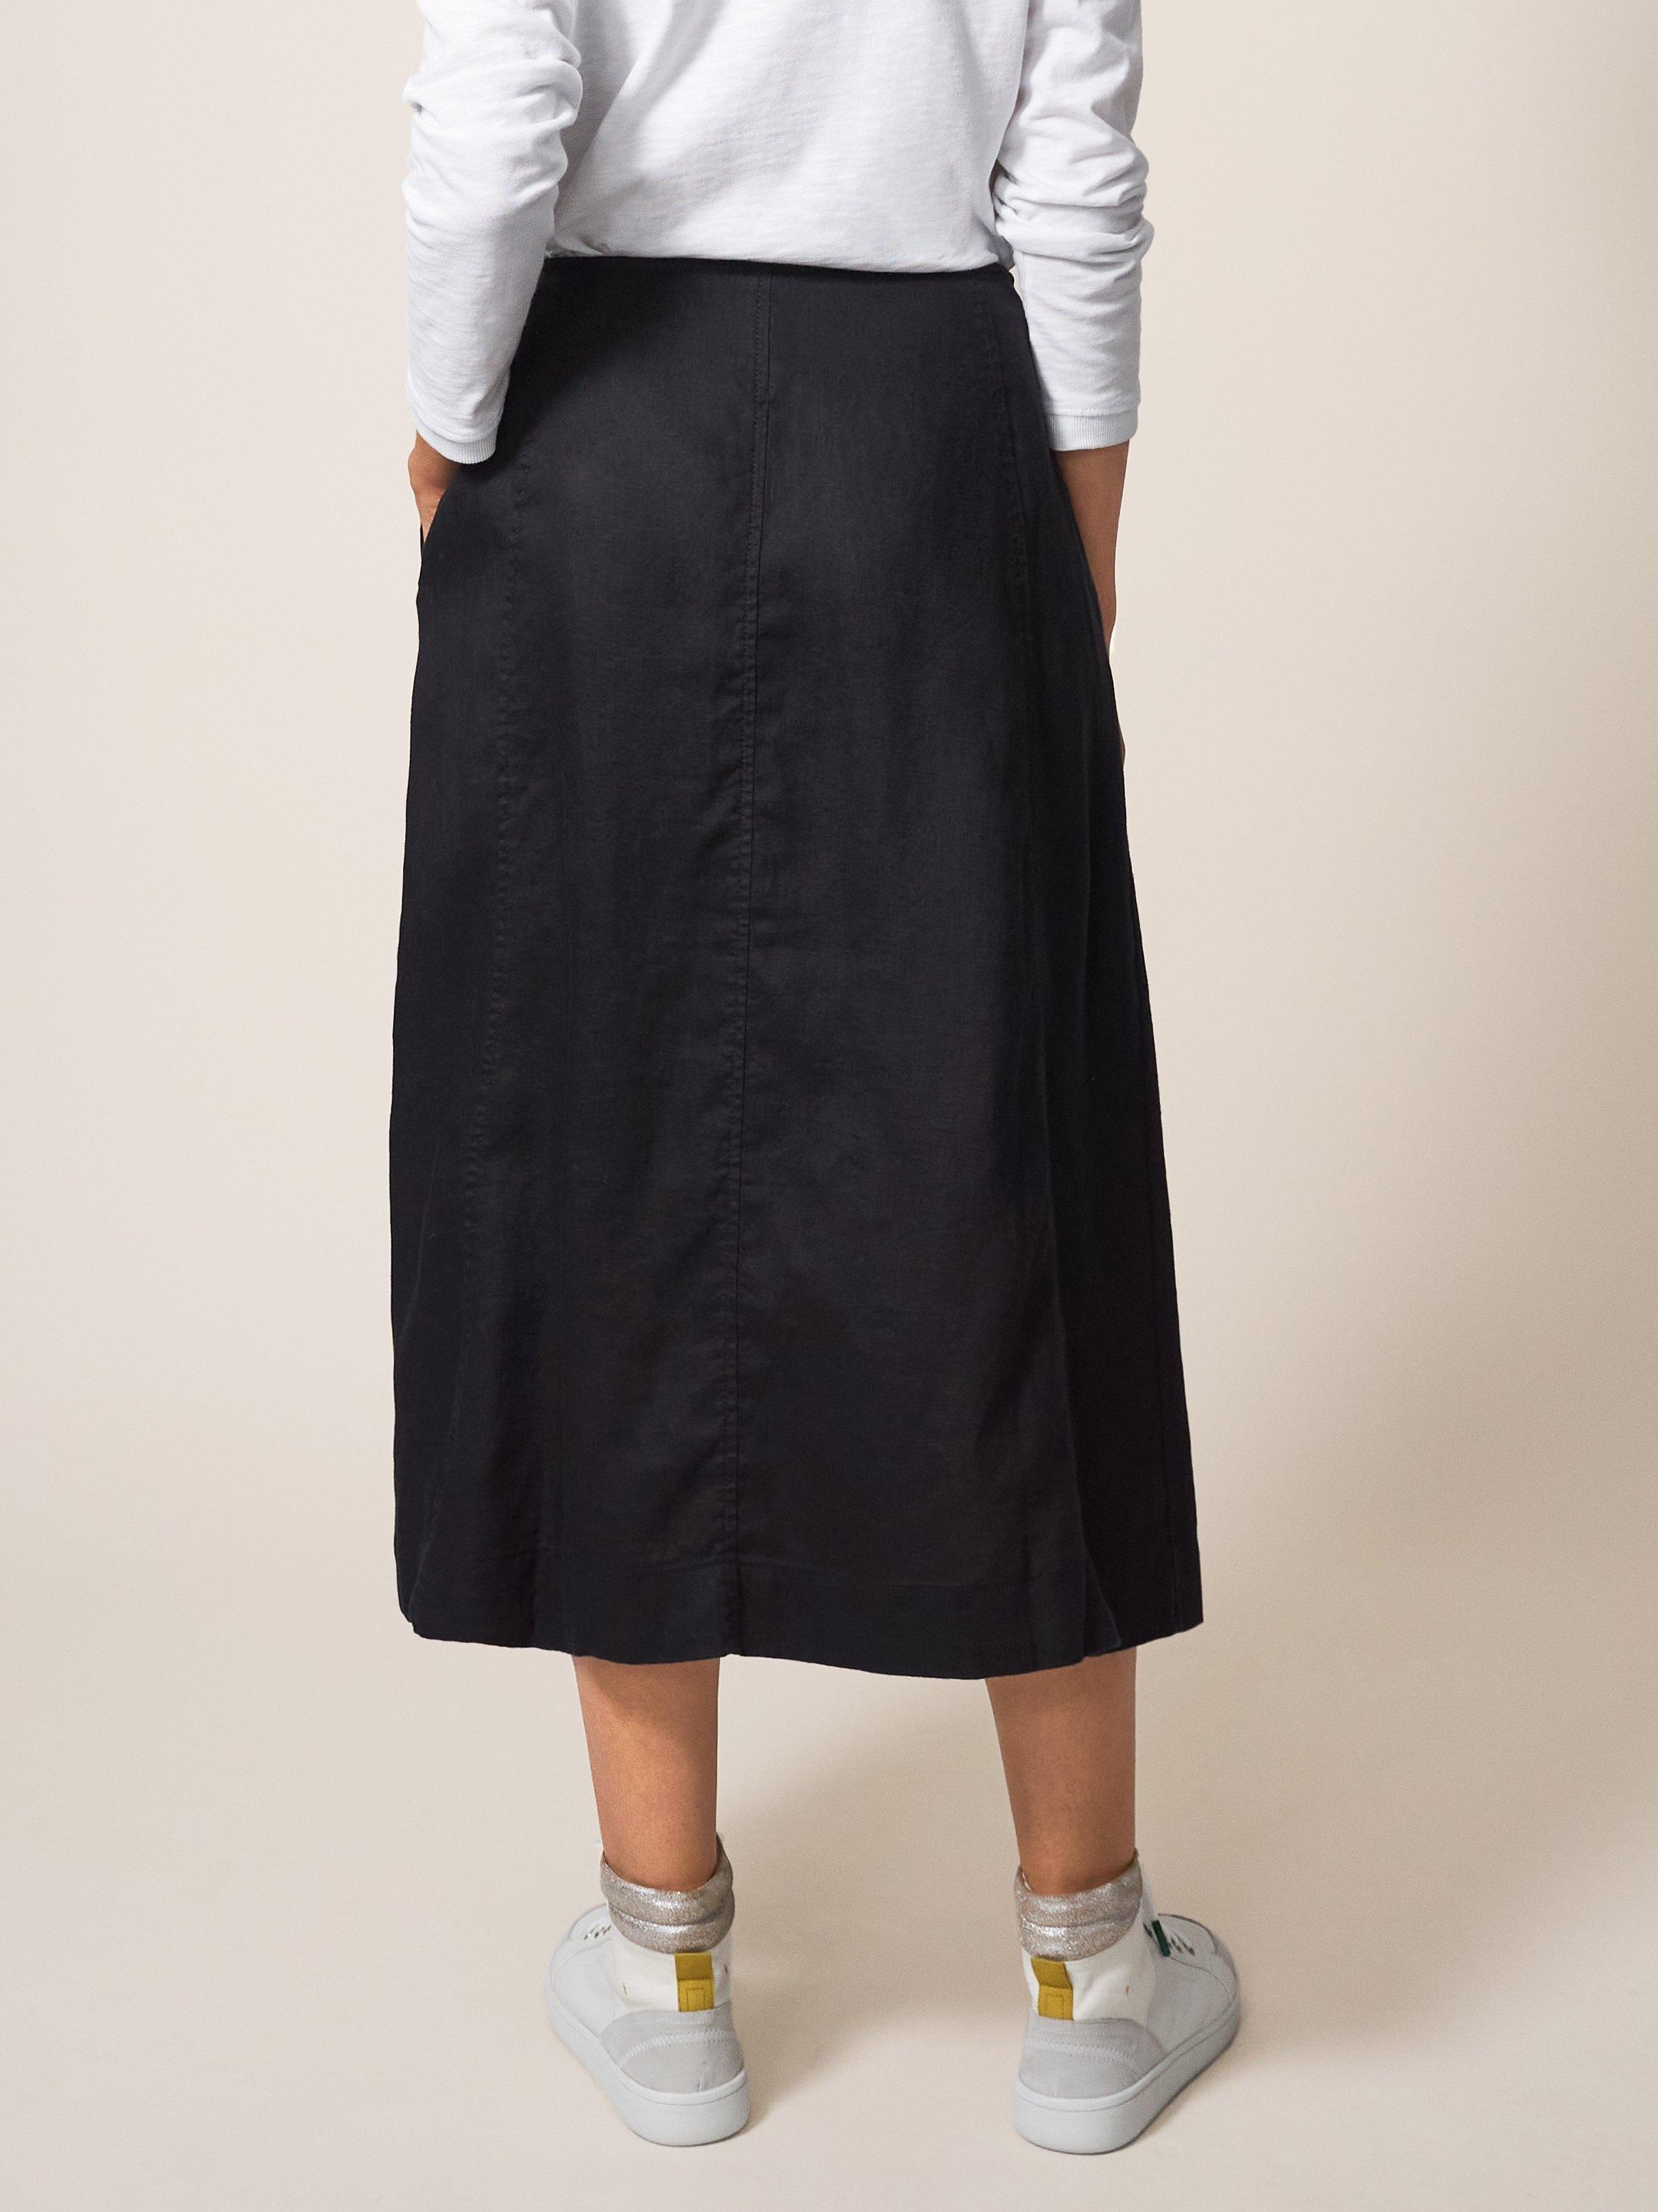 Ciara Linen Skirt in WASHED BLK - MODEL BACK